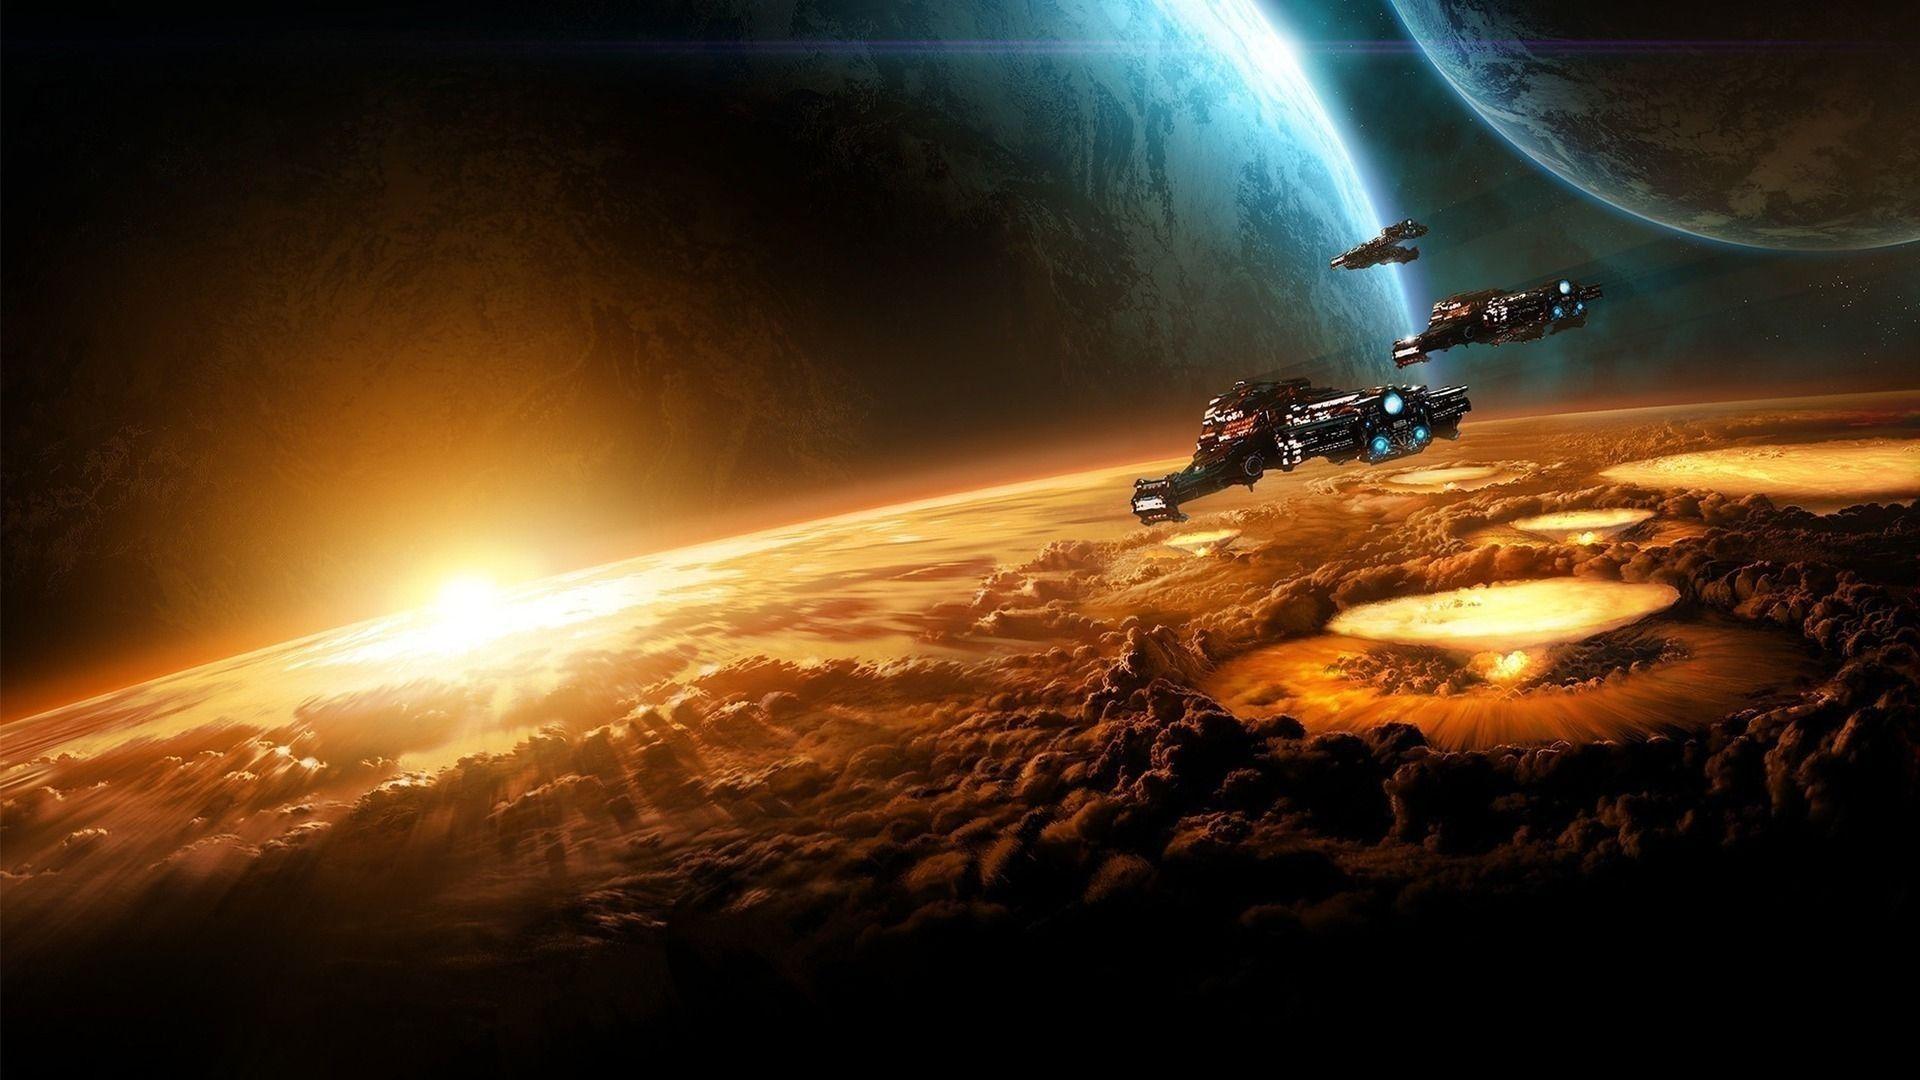 Spaceship HD Wallpaper by Alex Andreev